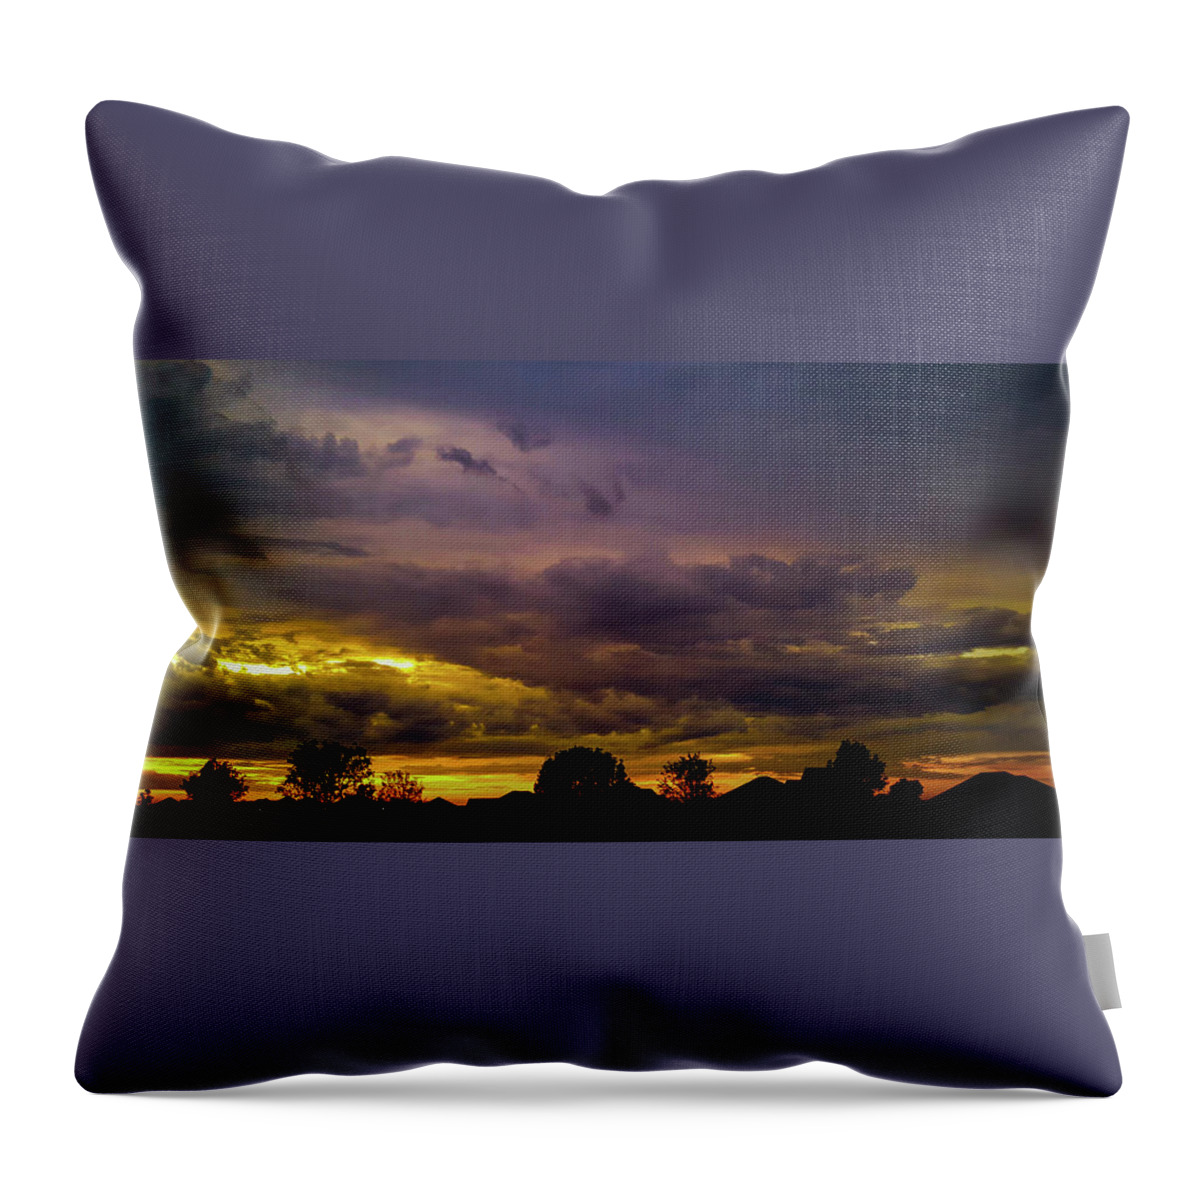 Oklahoma Throw Pillow featuring the digital art OK Sunrise by Jorge Estrada